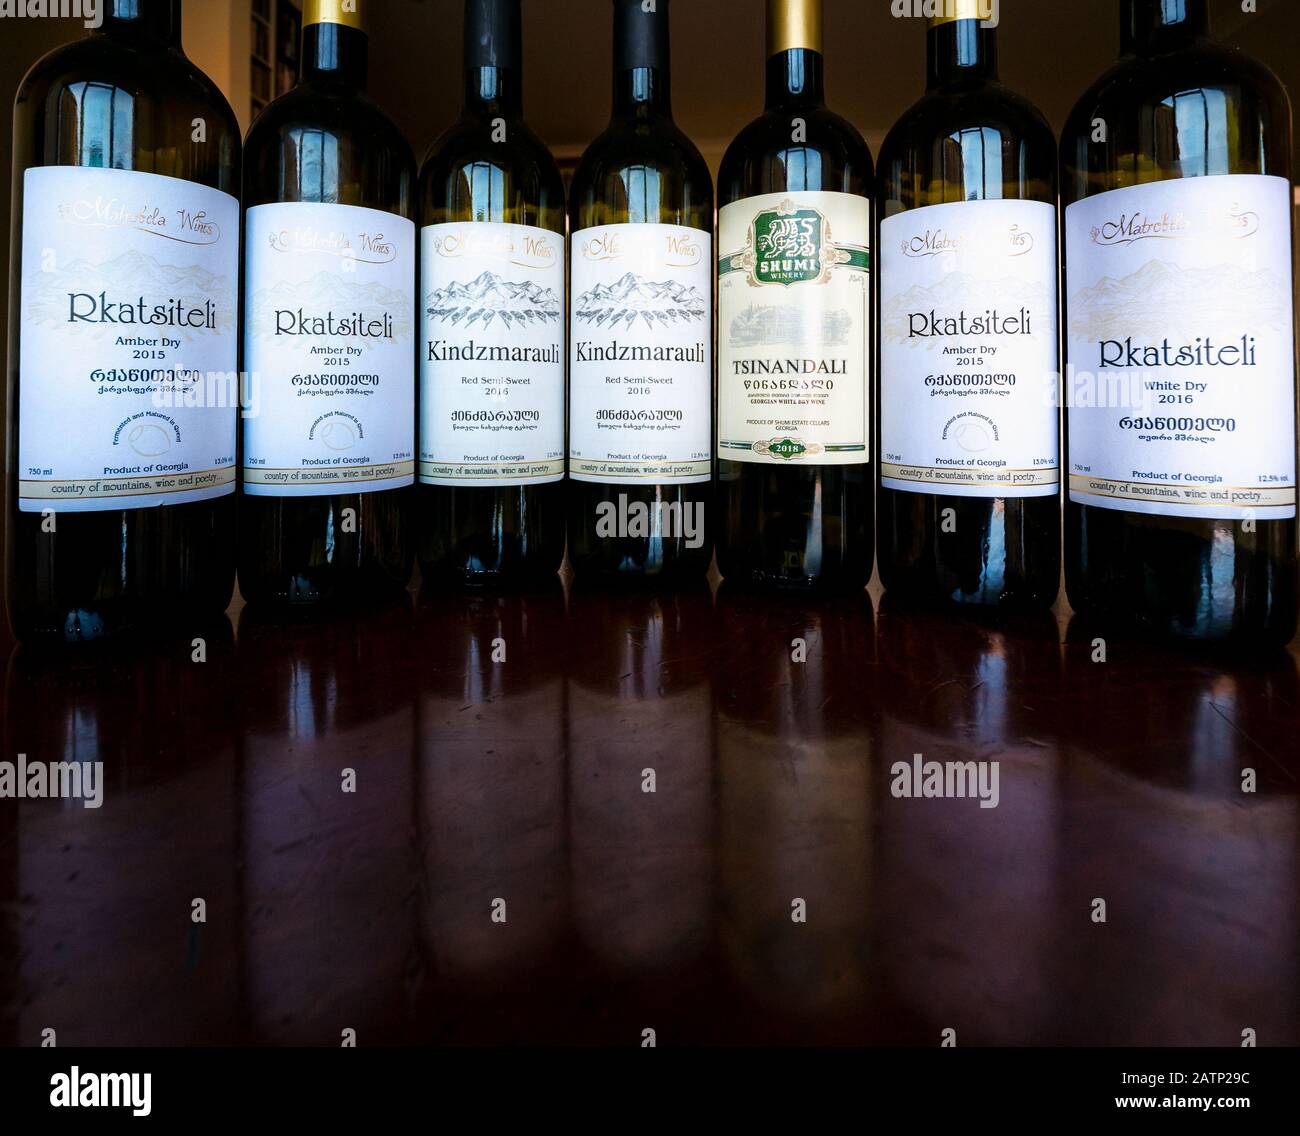 Esposizione di bottiglie di vino georgiane vuote ed etichette di vino: Rkatsiteli ambra e vini bianchi, Kindzmarauli rosso semi-dolce Foto Stock